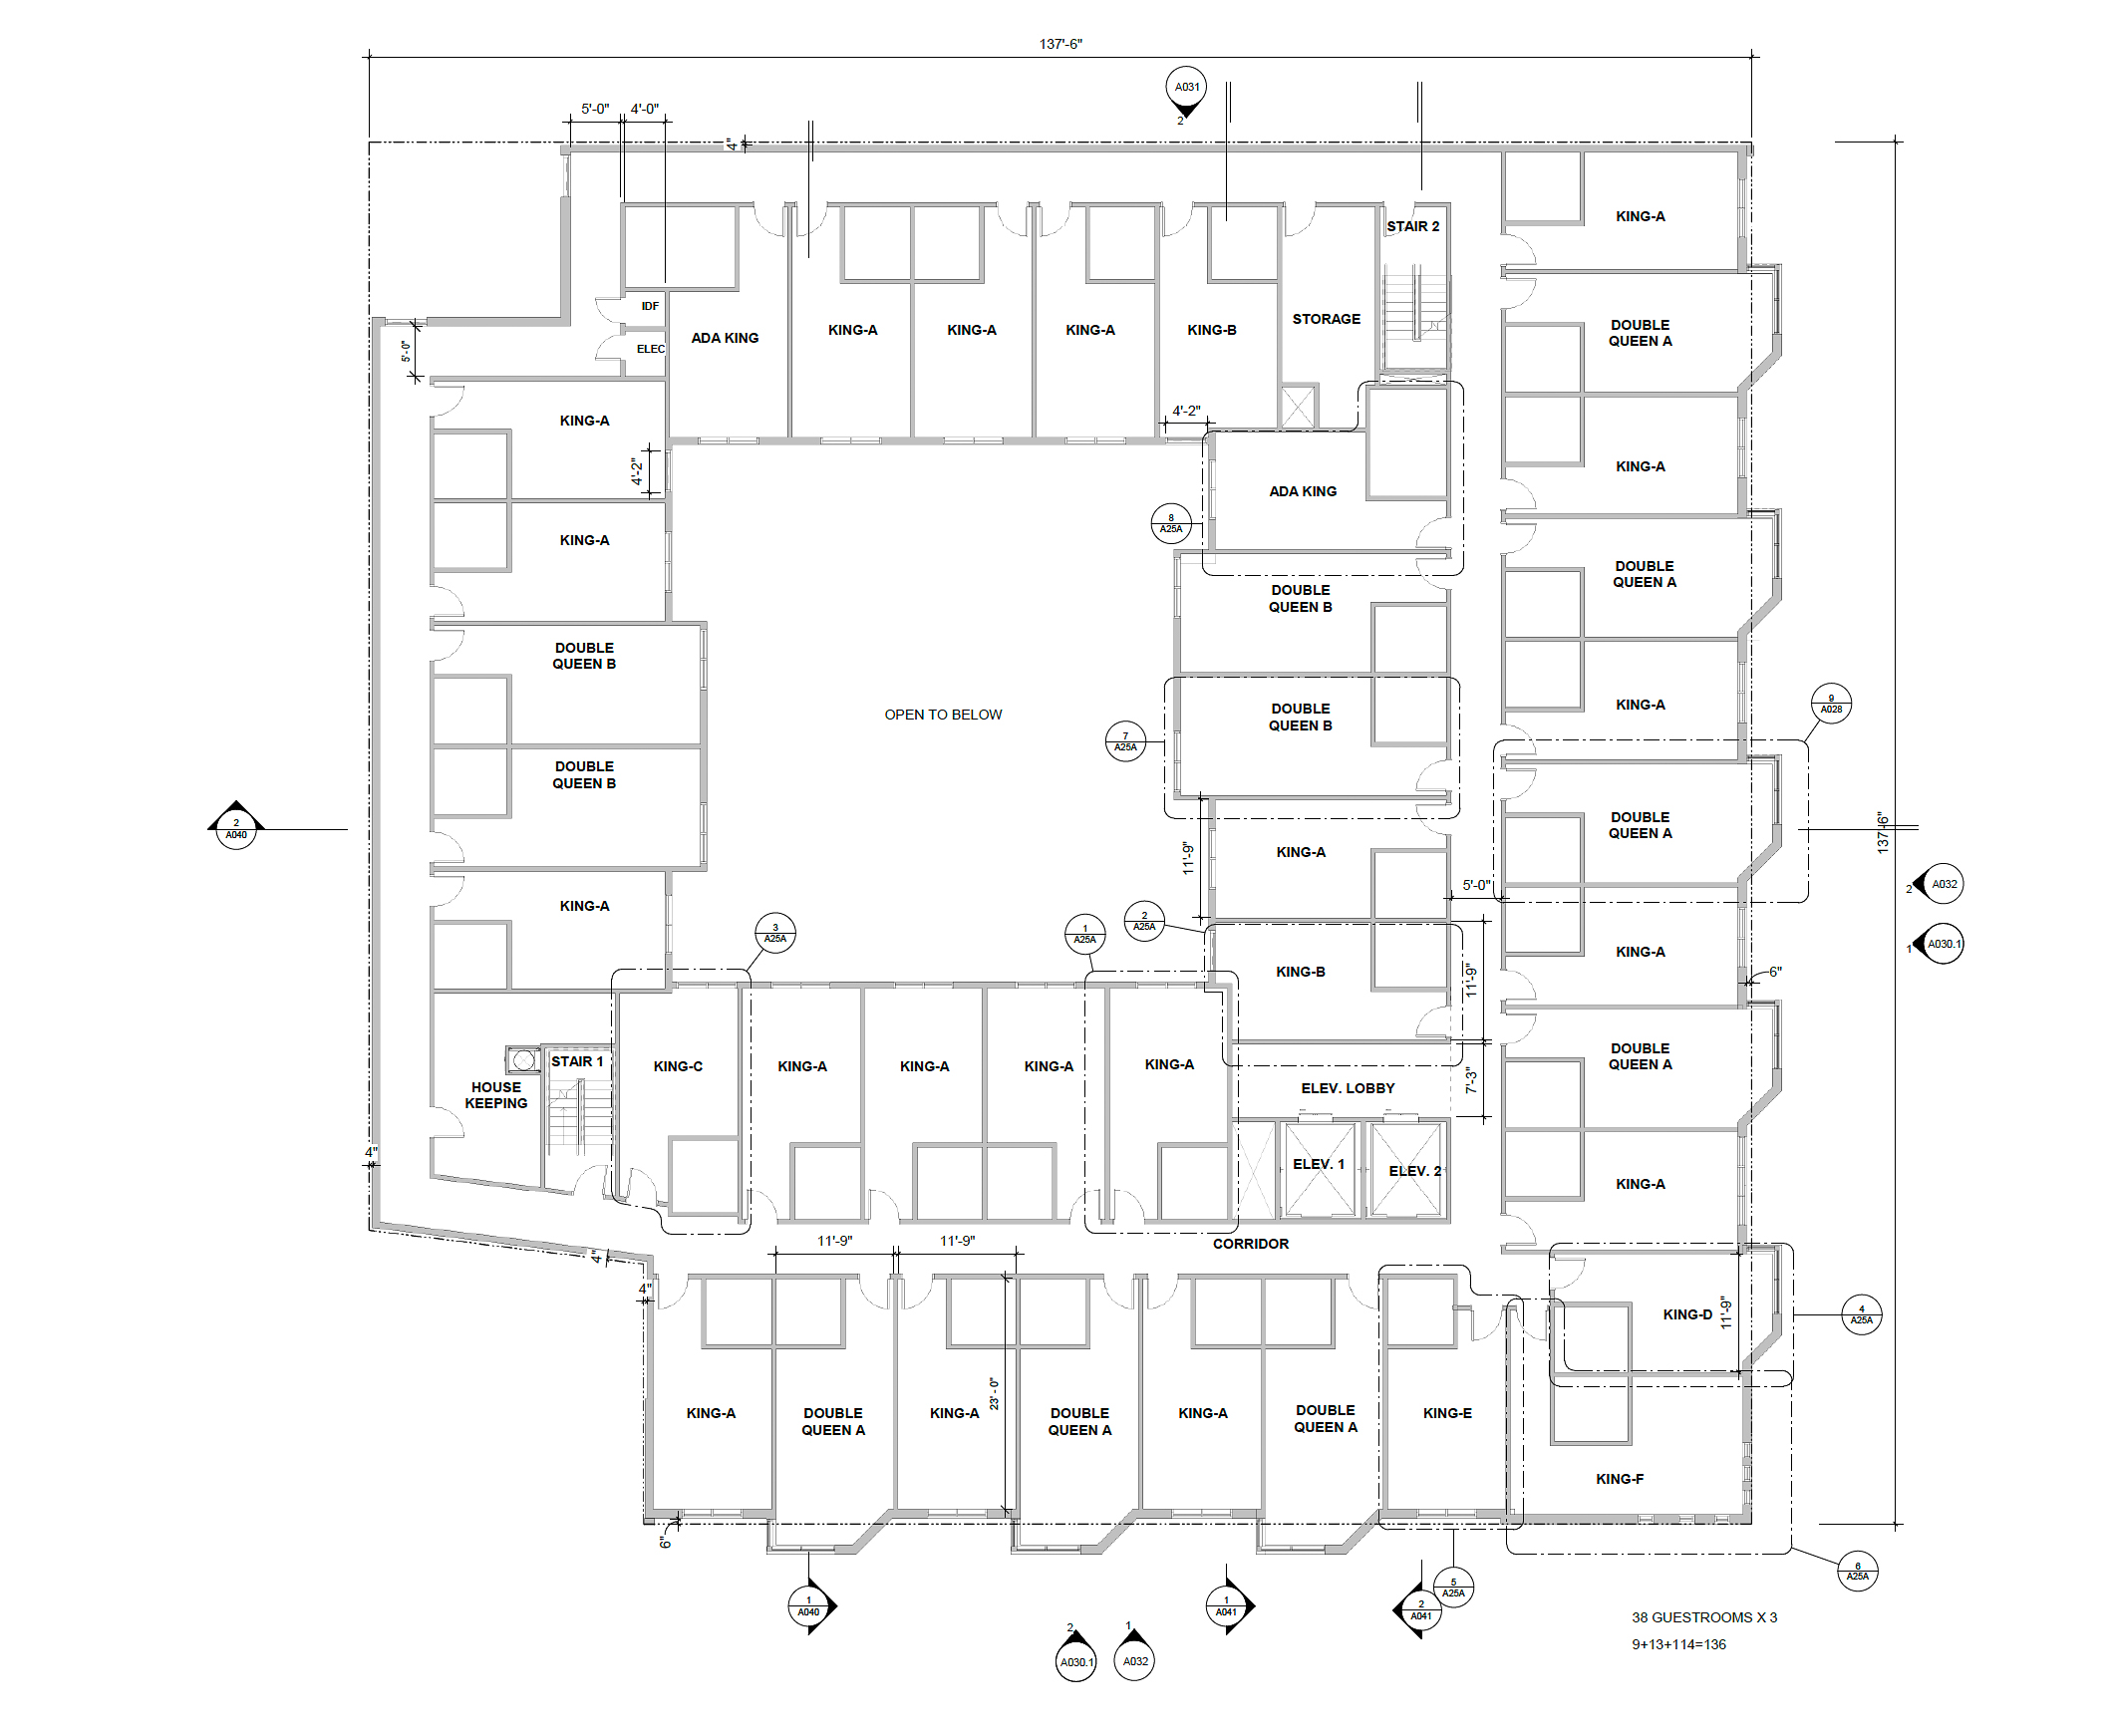 2629 Taylor Street floor plan, illustration by Stanton Architecture